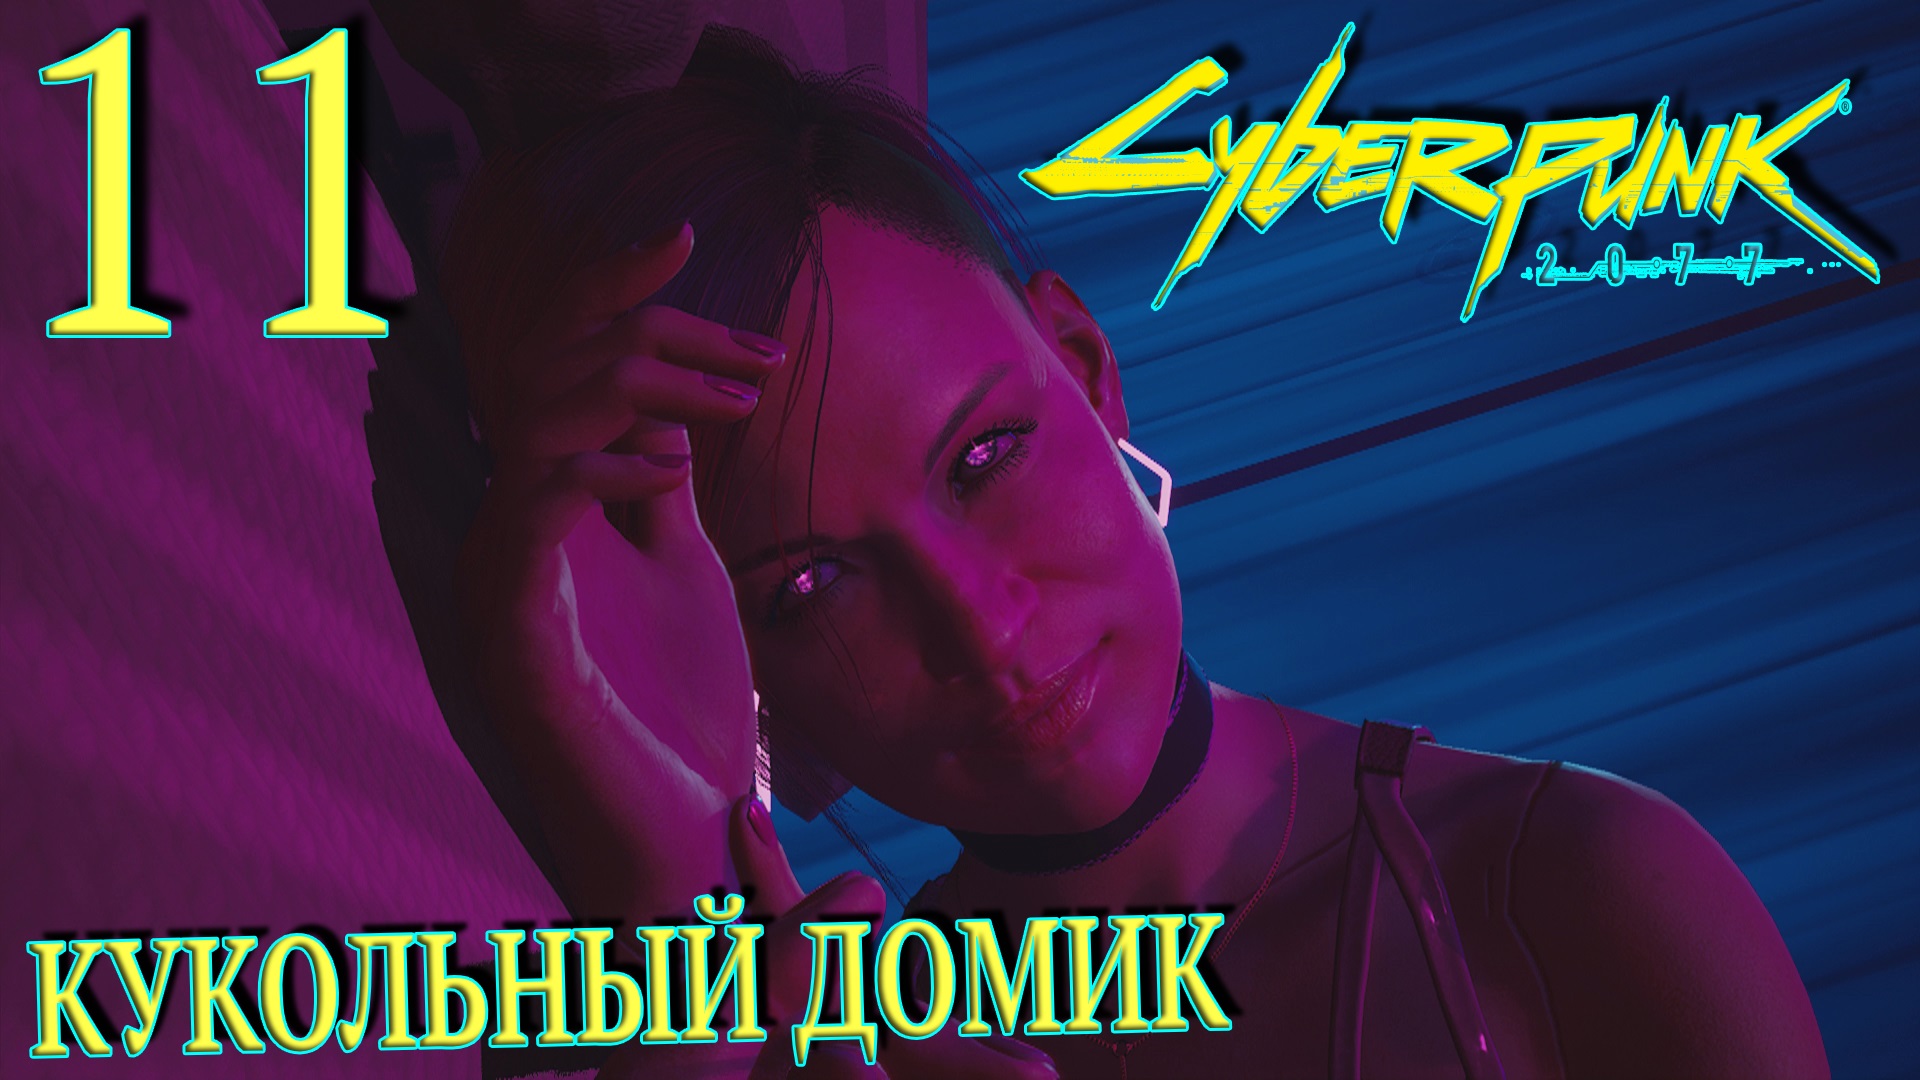 Cyberpunk русский язык озвучки фото 76